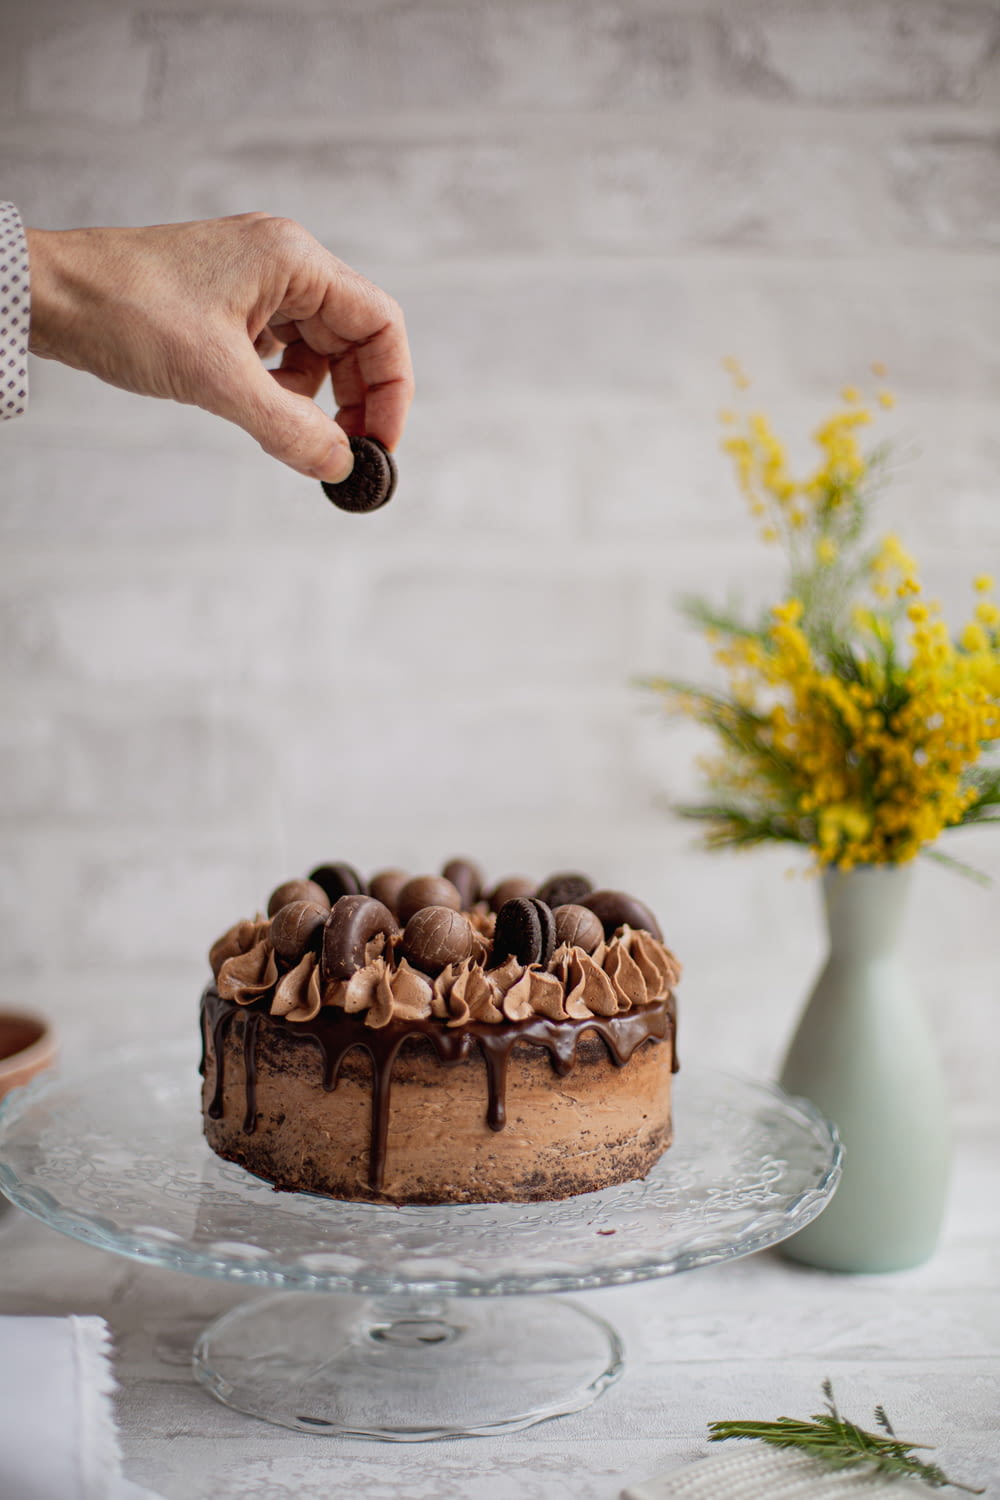 a hand holding a knife over a chocolate cake